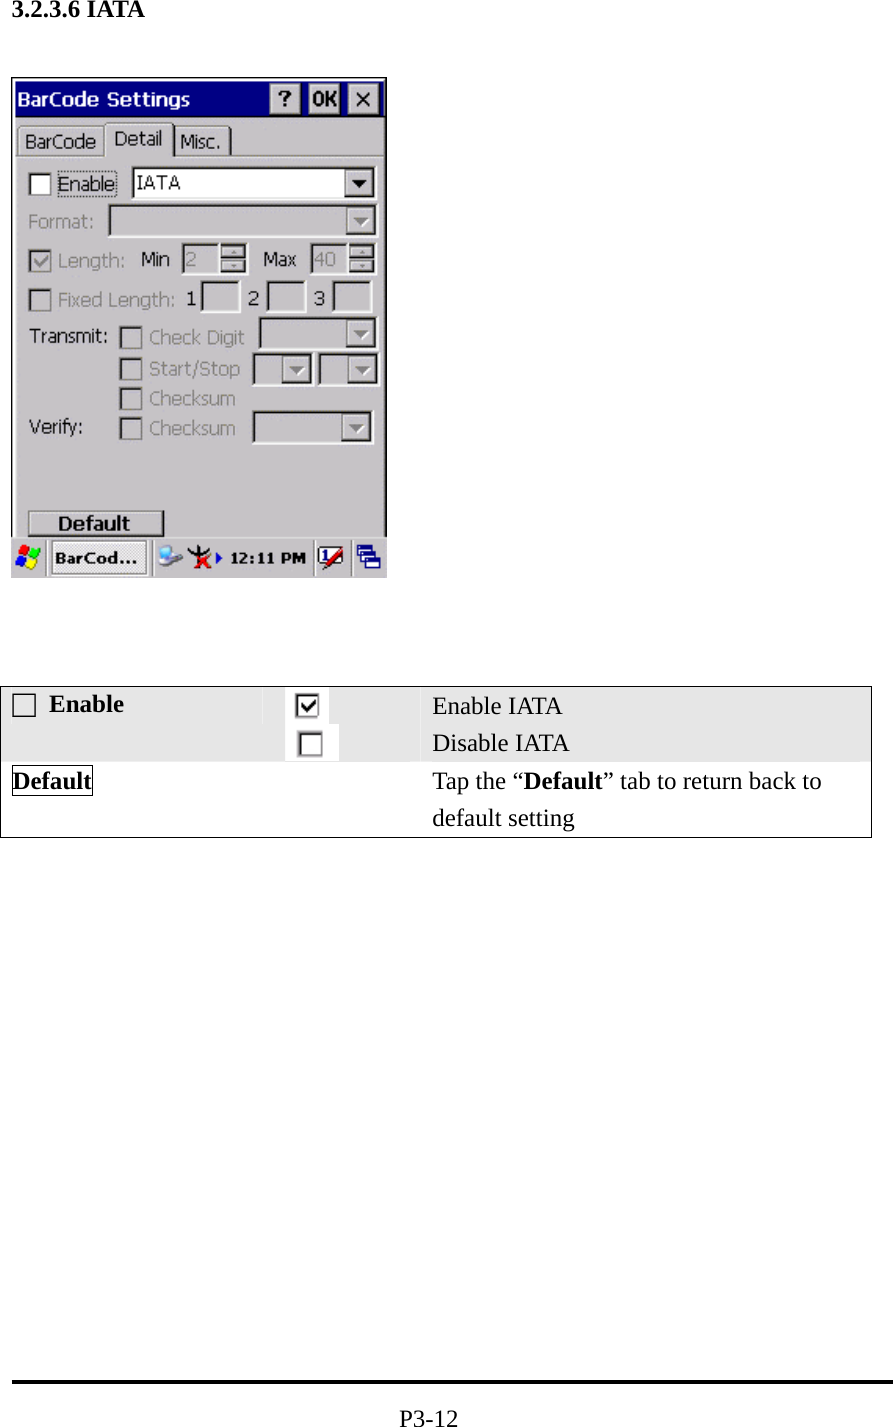 3.2.3.6 IATA                    P3-12 □ Enable   Enable IATA Disable IATA Default   Tap the “Default” tab to return back to default setting 